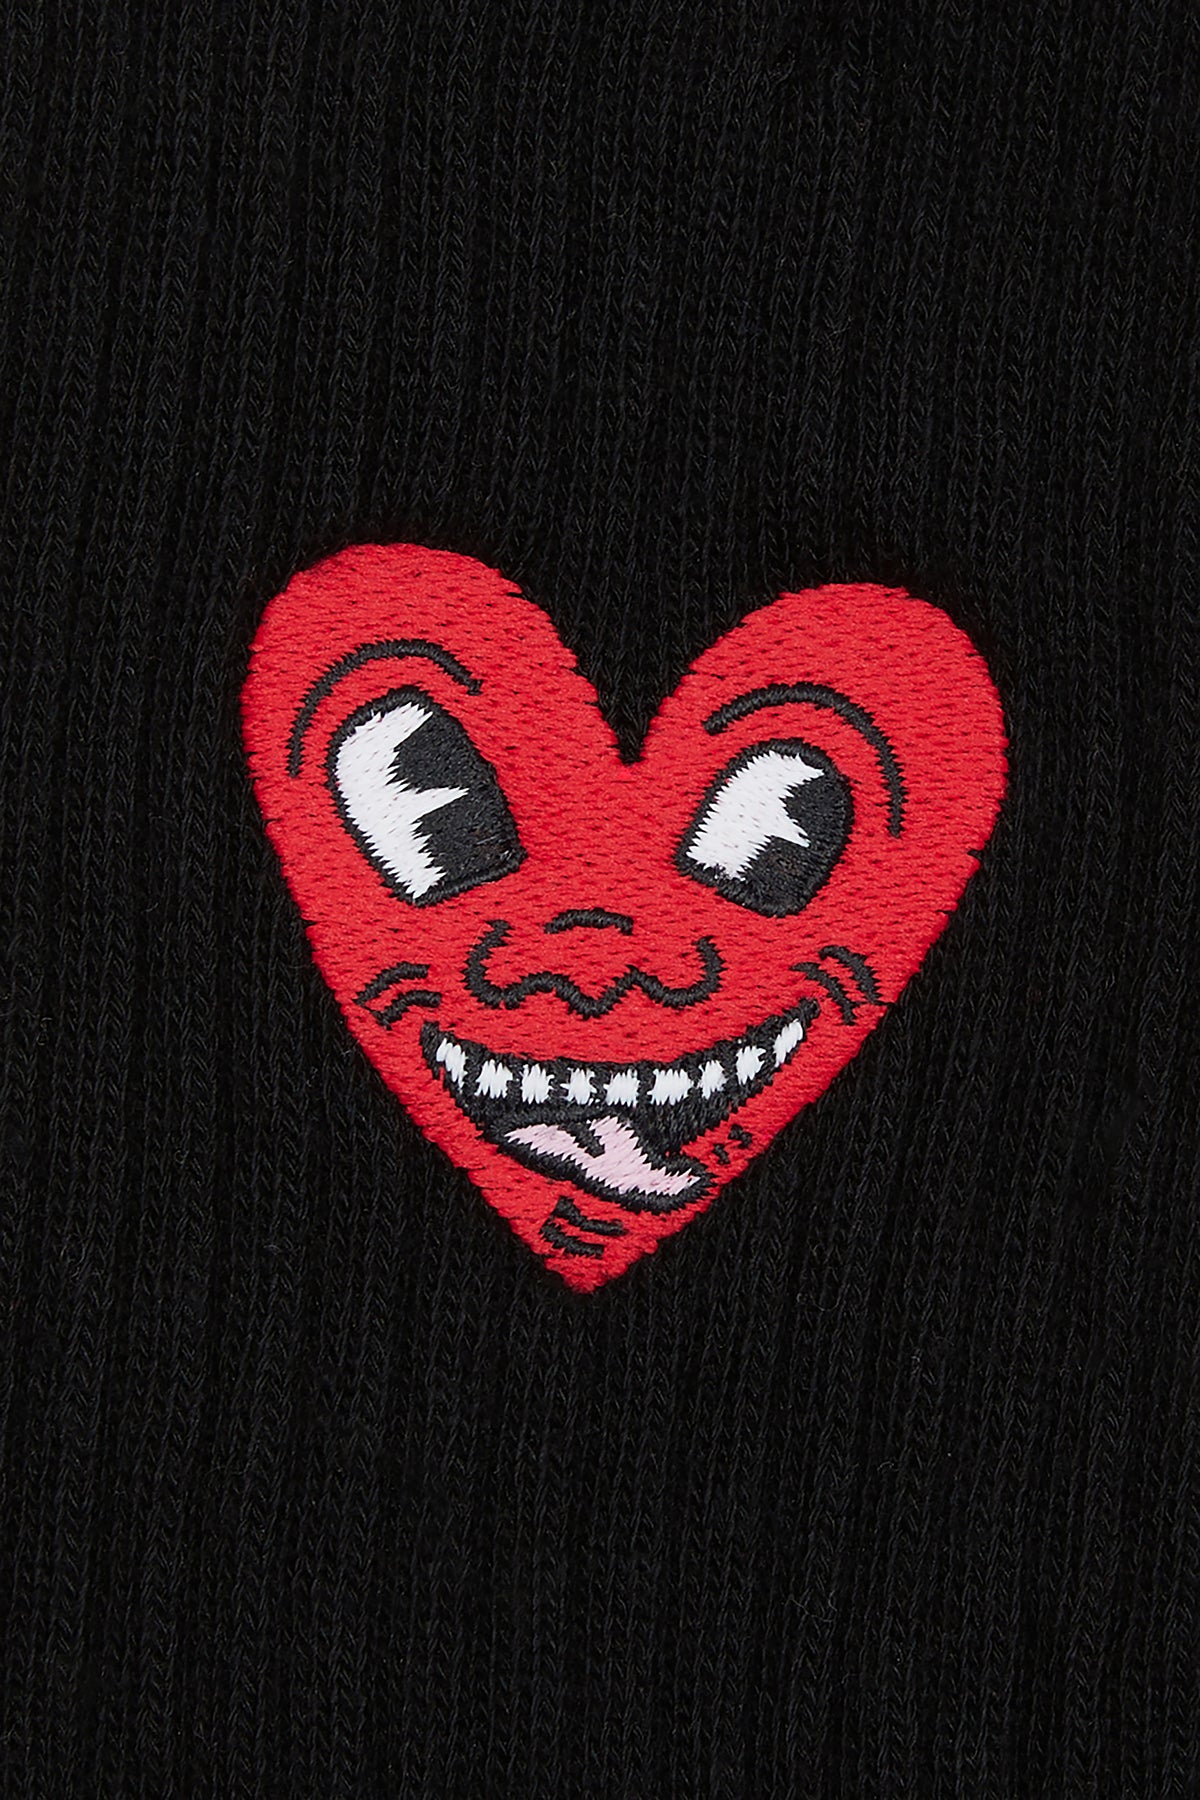 Heart Havlu Çorap - Siyah